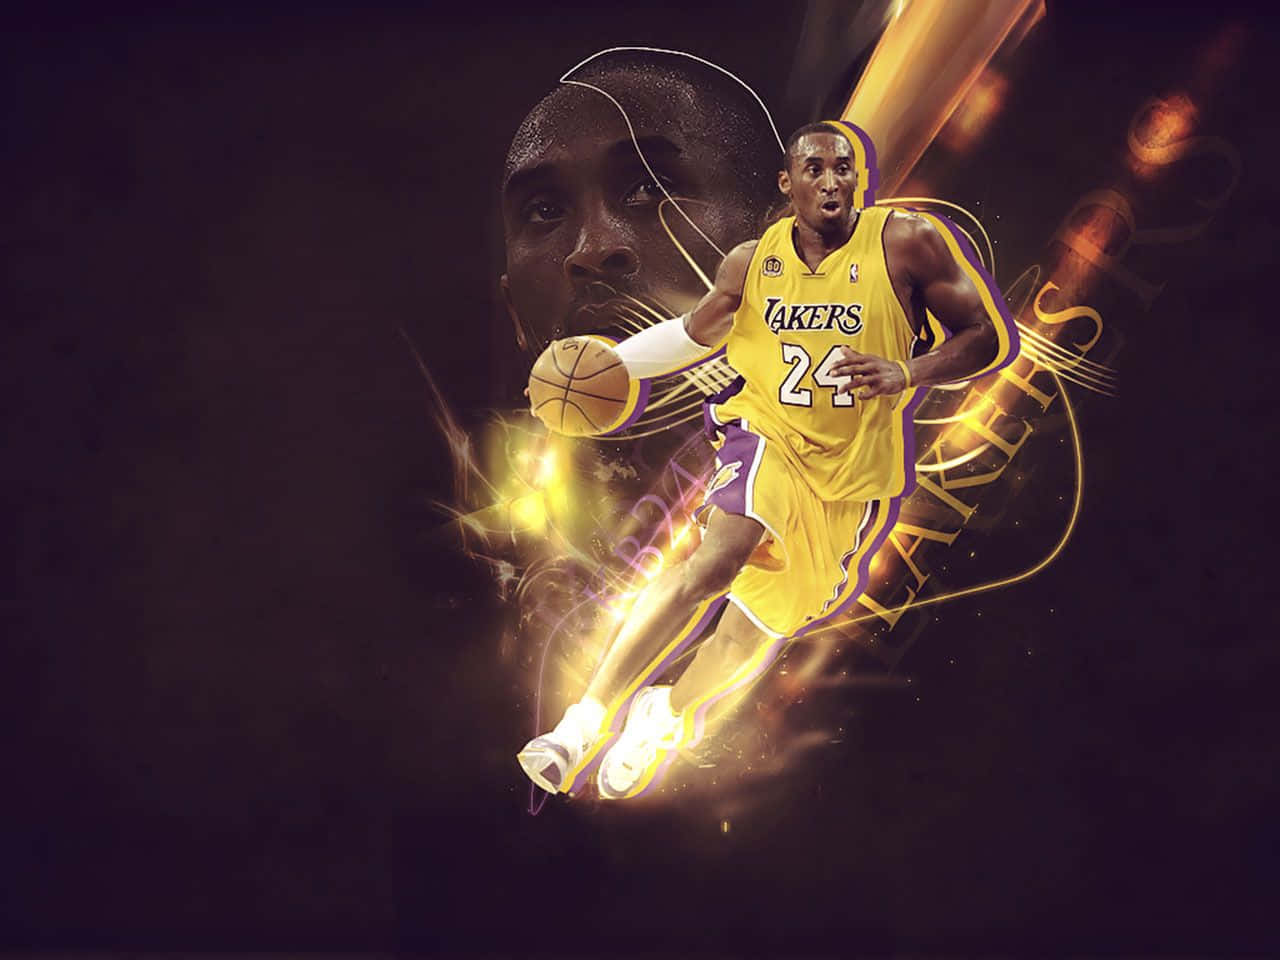 Legendary Basketball Player Kobe Bryant